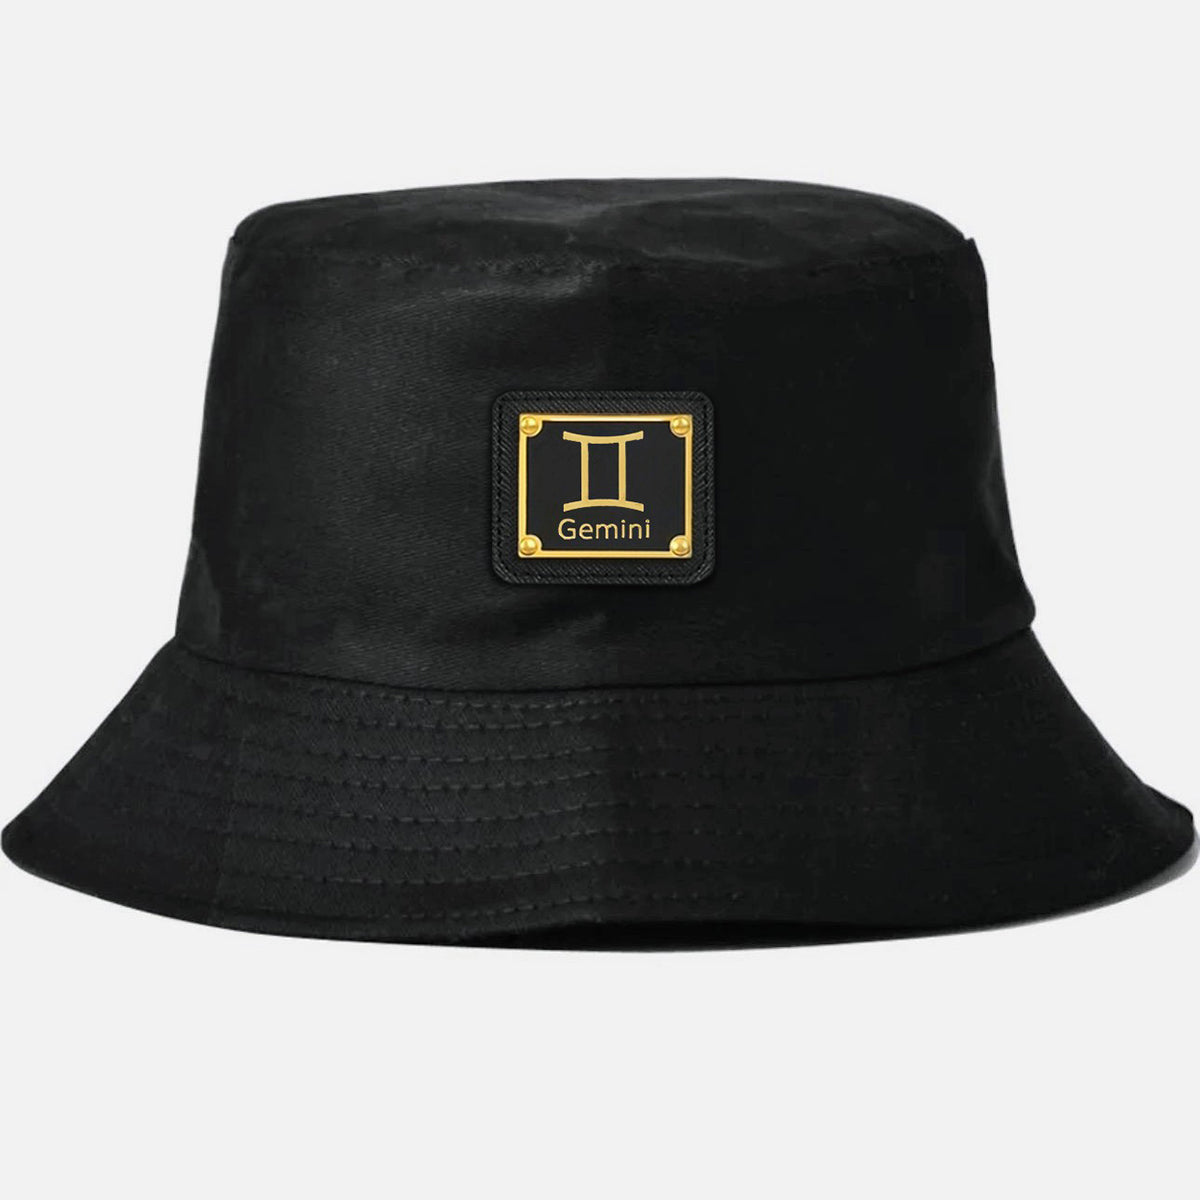 Gemini bucket hat